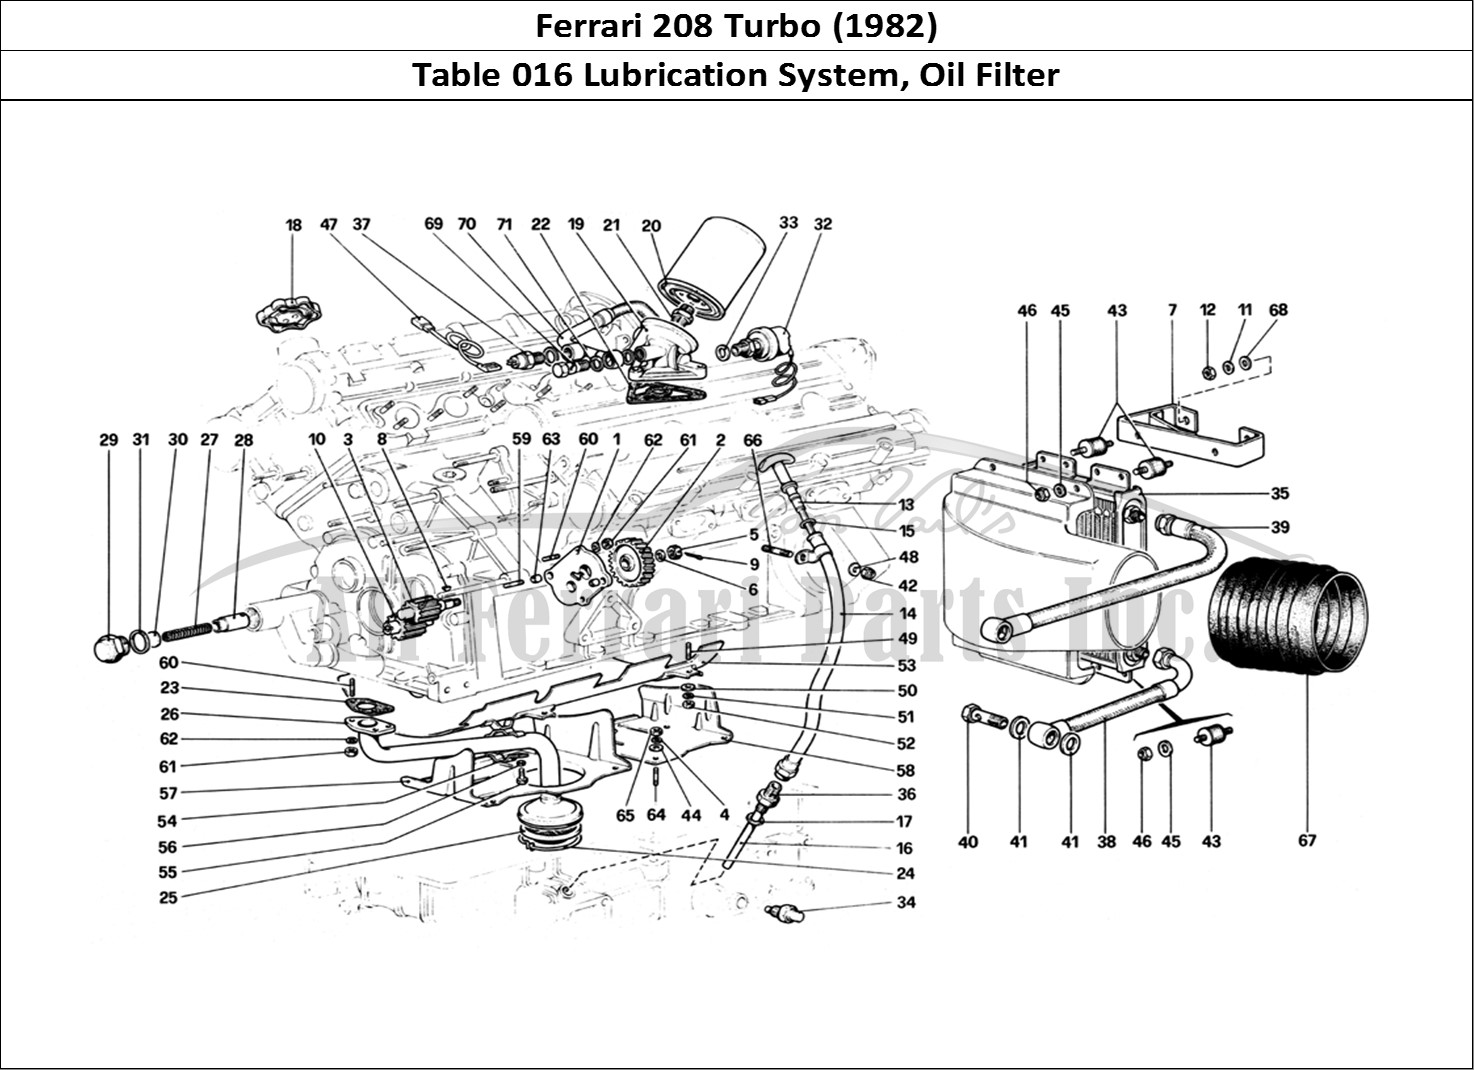 Ferrari Parts Ferrari 208 Turbo (1982) Page 016 Lubrication System